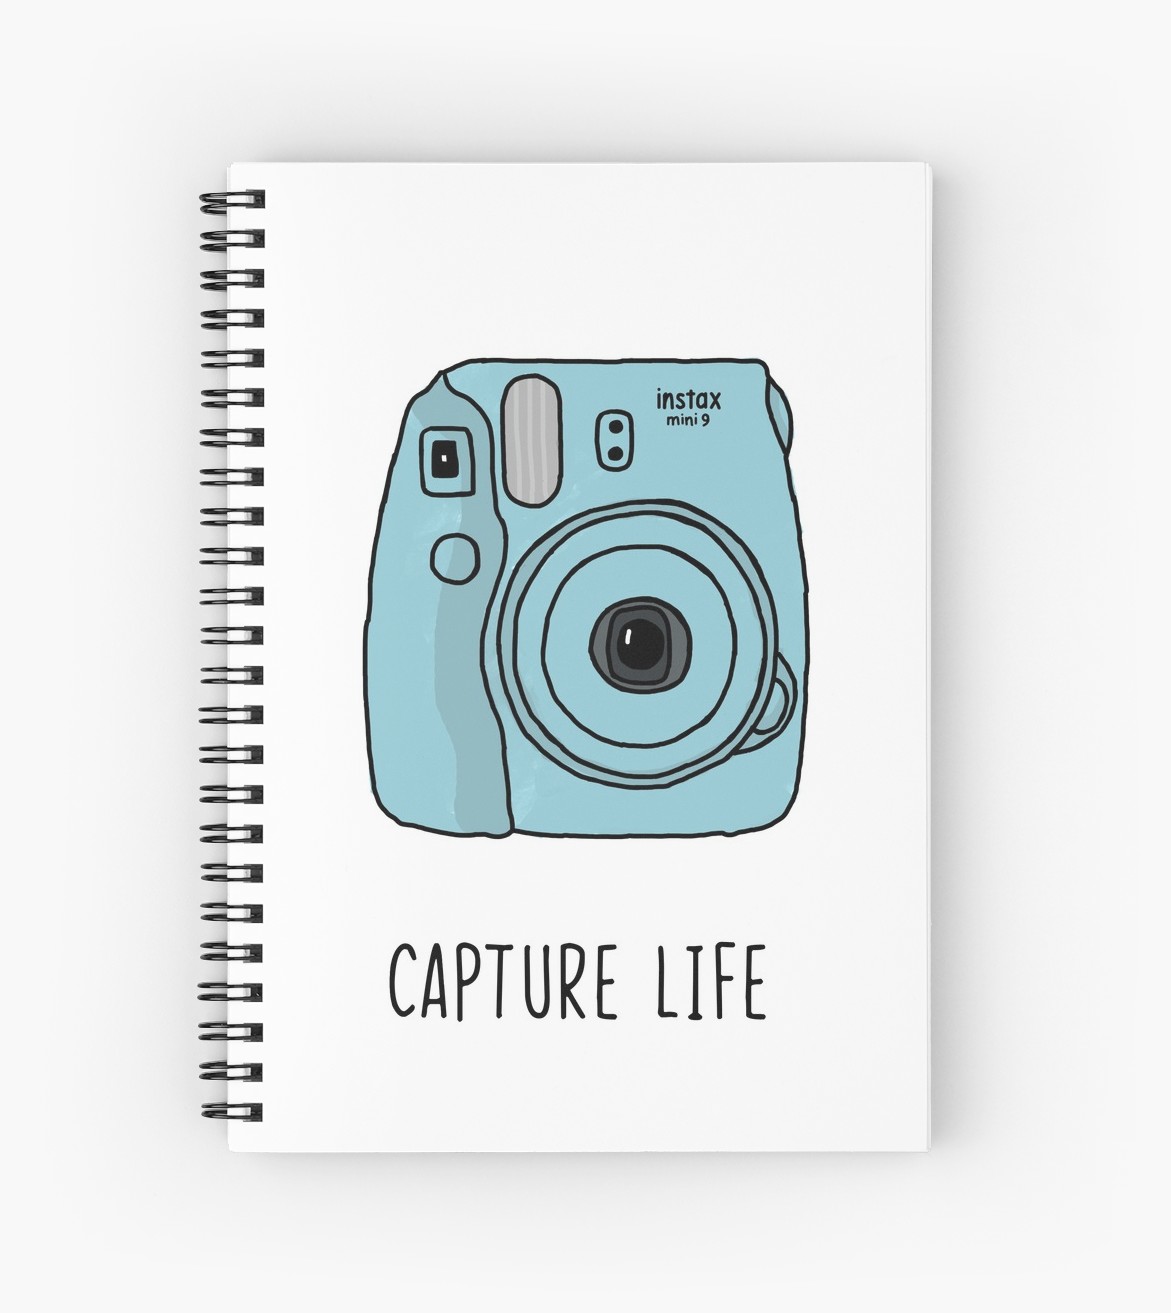 Polaroid Camera Drawing at Explore collection of